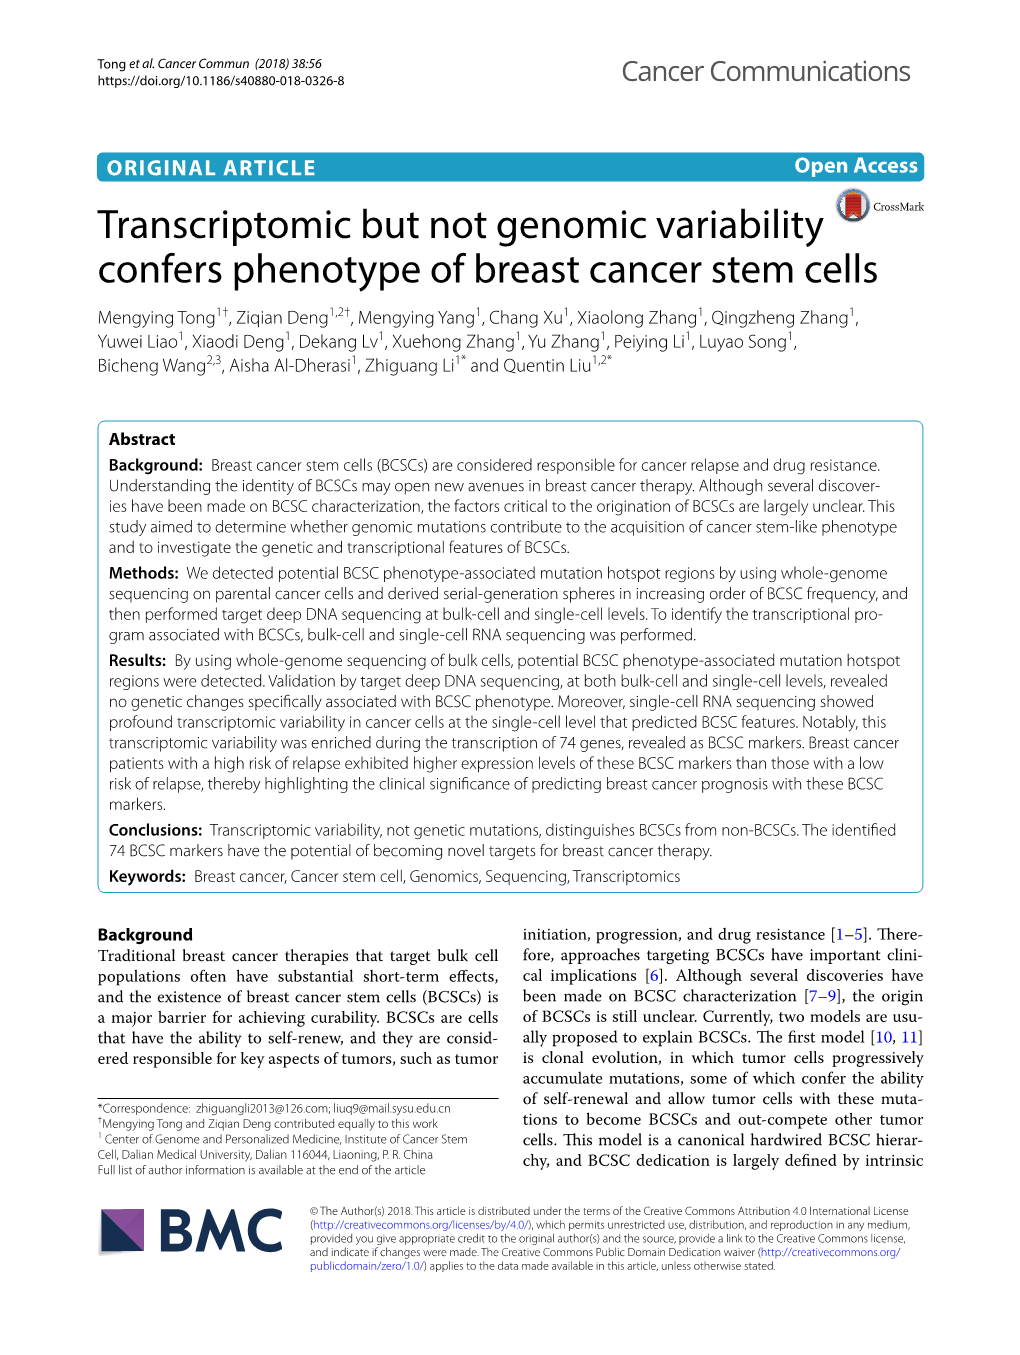 Transcriptomic but Not Genomic Variability Confers Phenotype Of